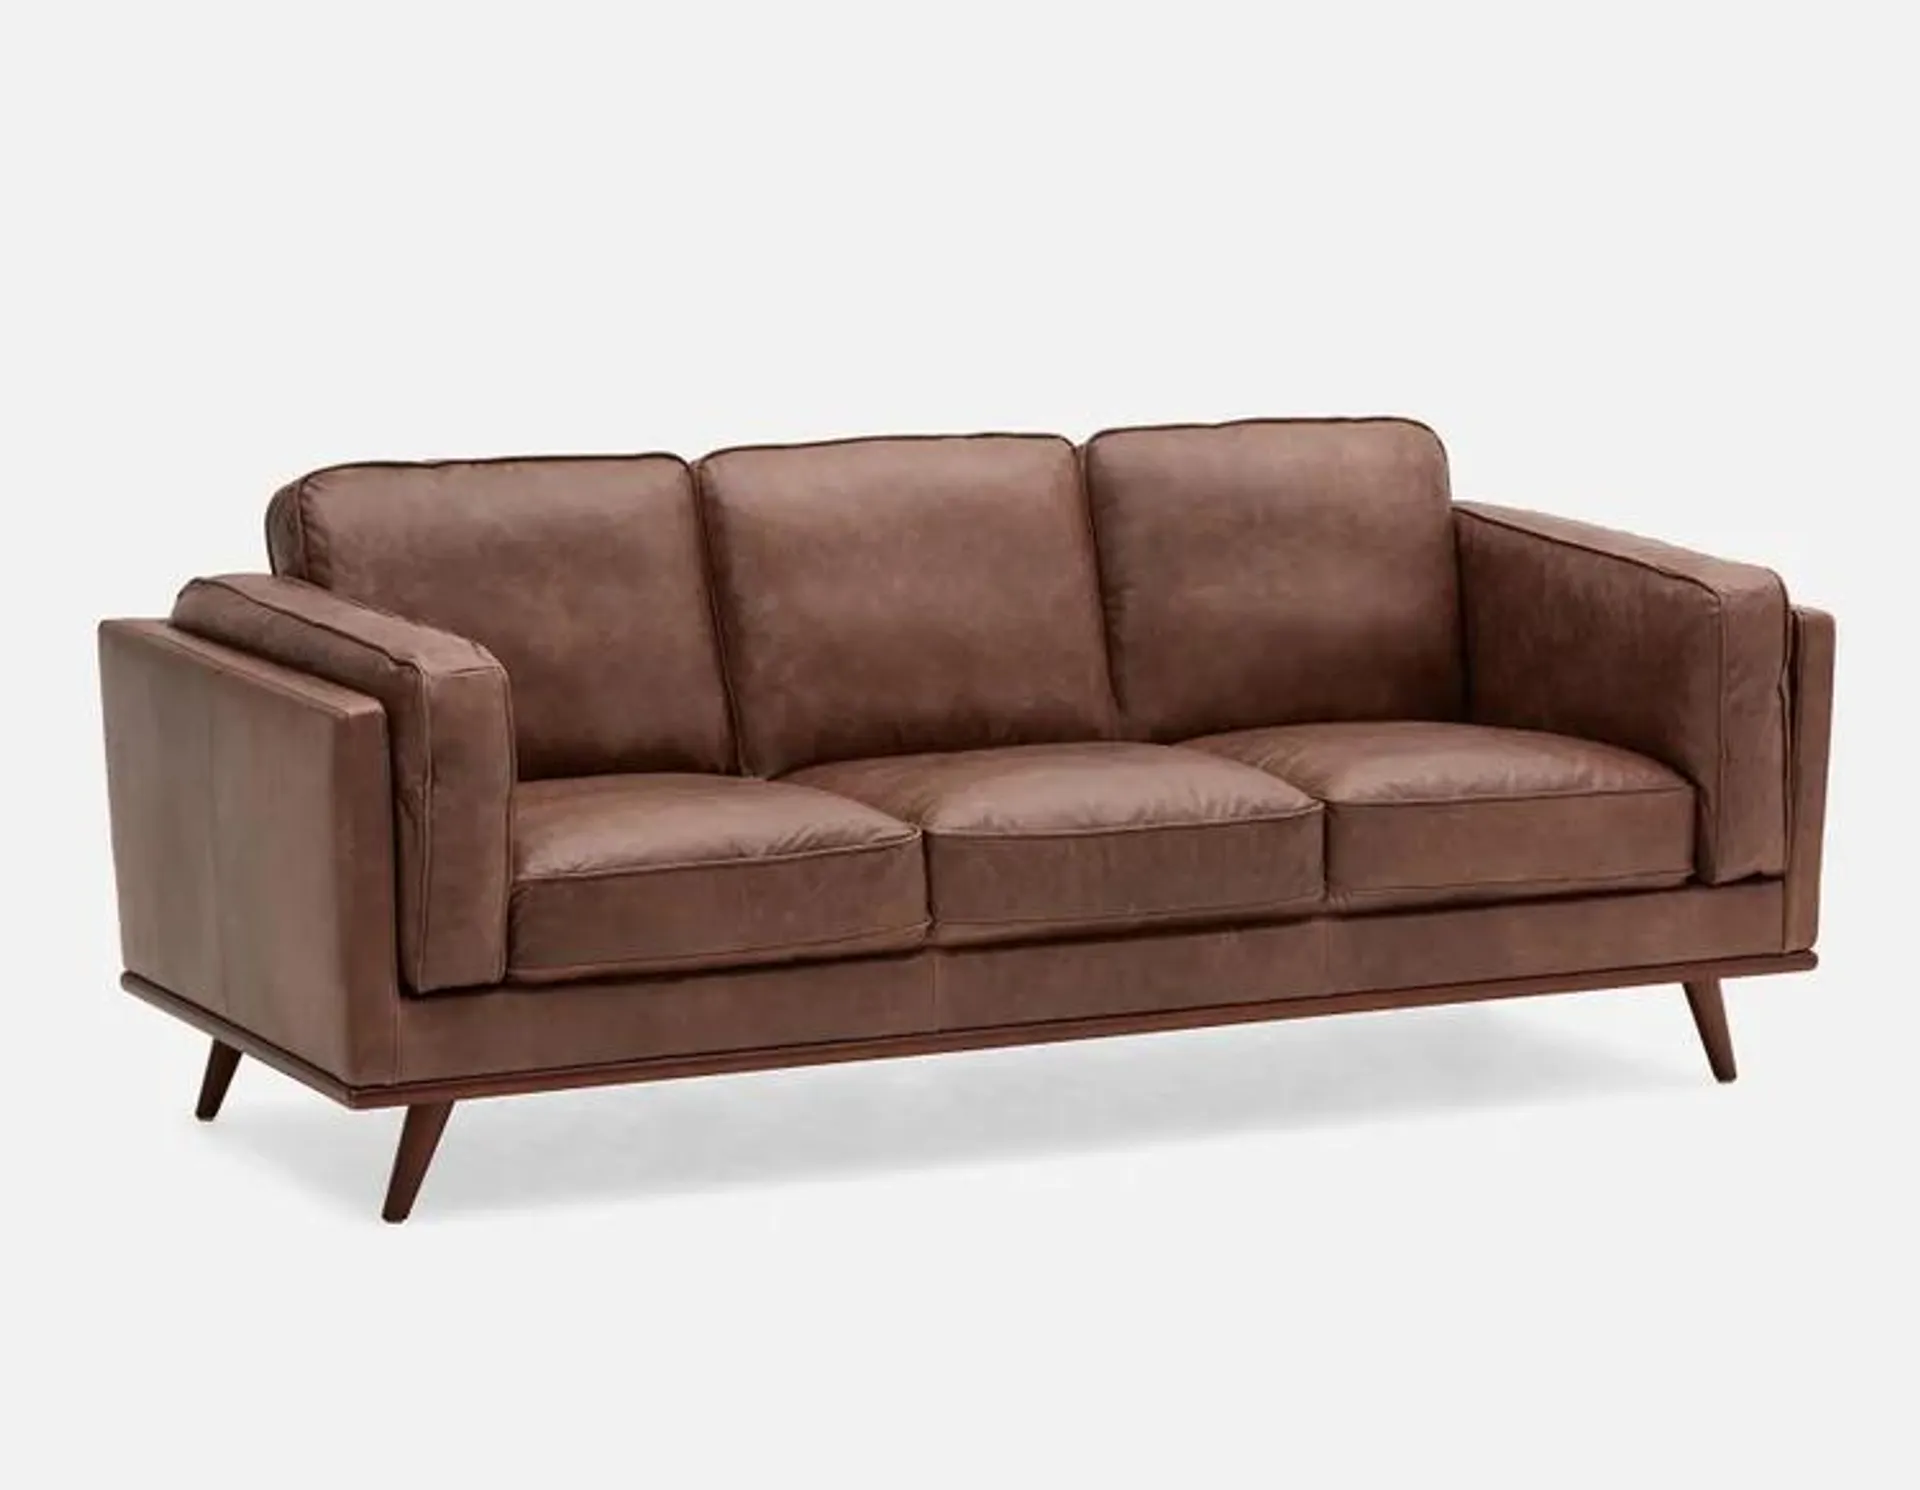 ROWAN 100% leather 3-seater Sofa